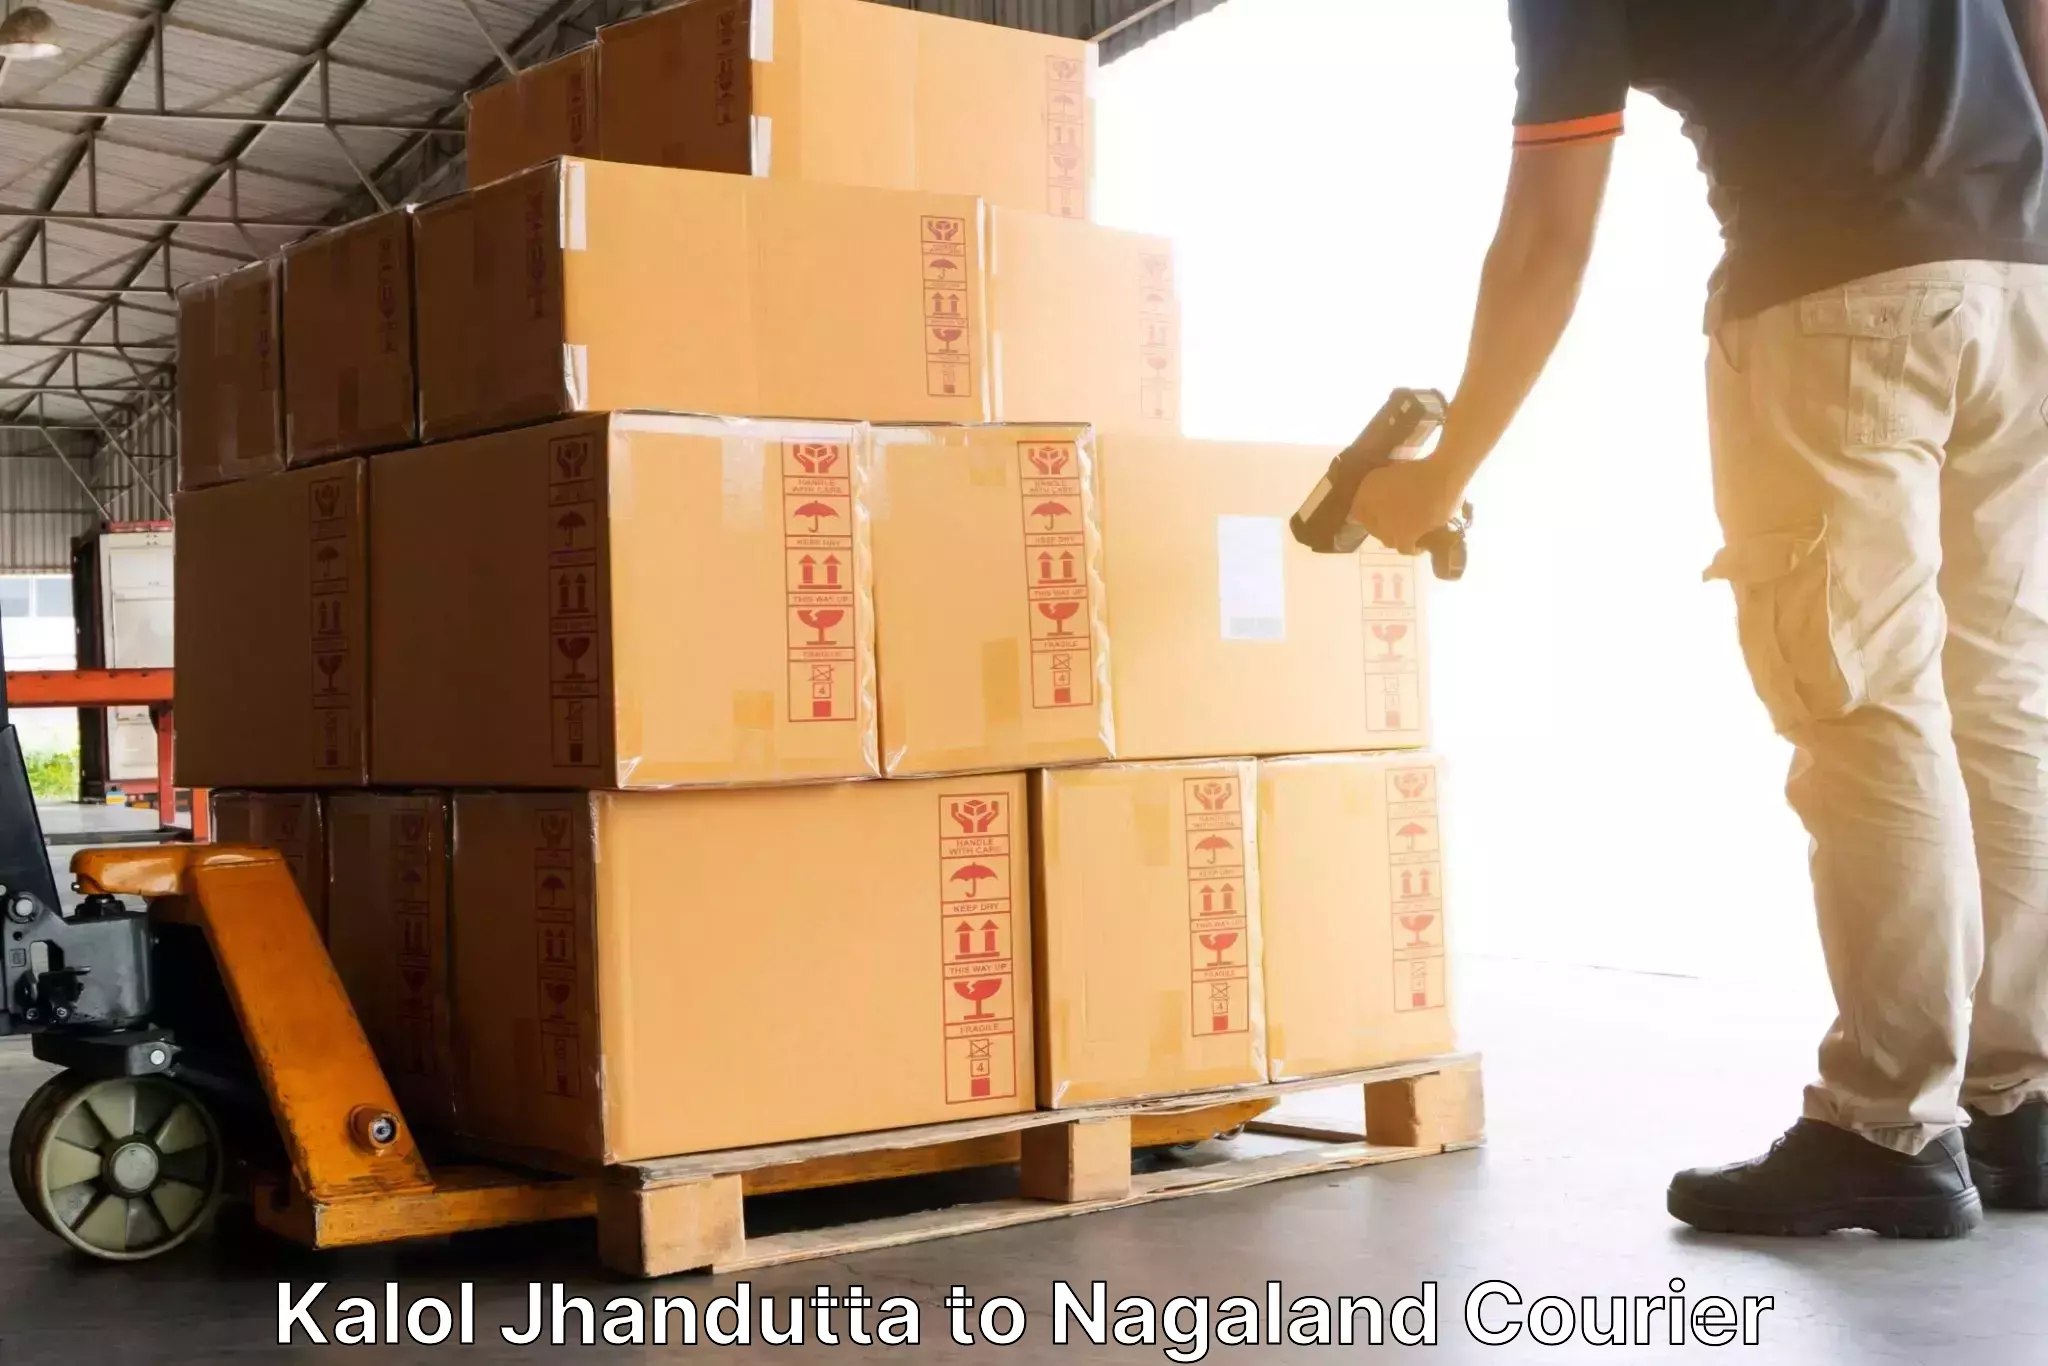 Versatile courier options Kalol Jhandutta to NIT Nagaland